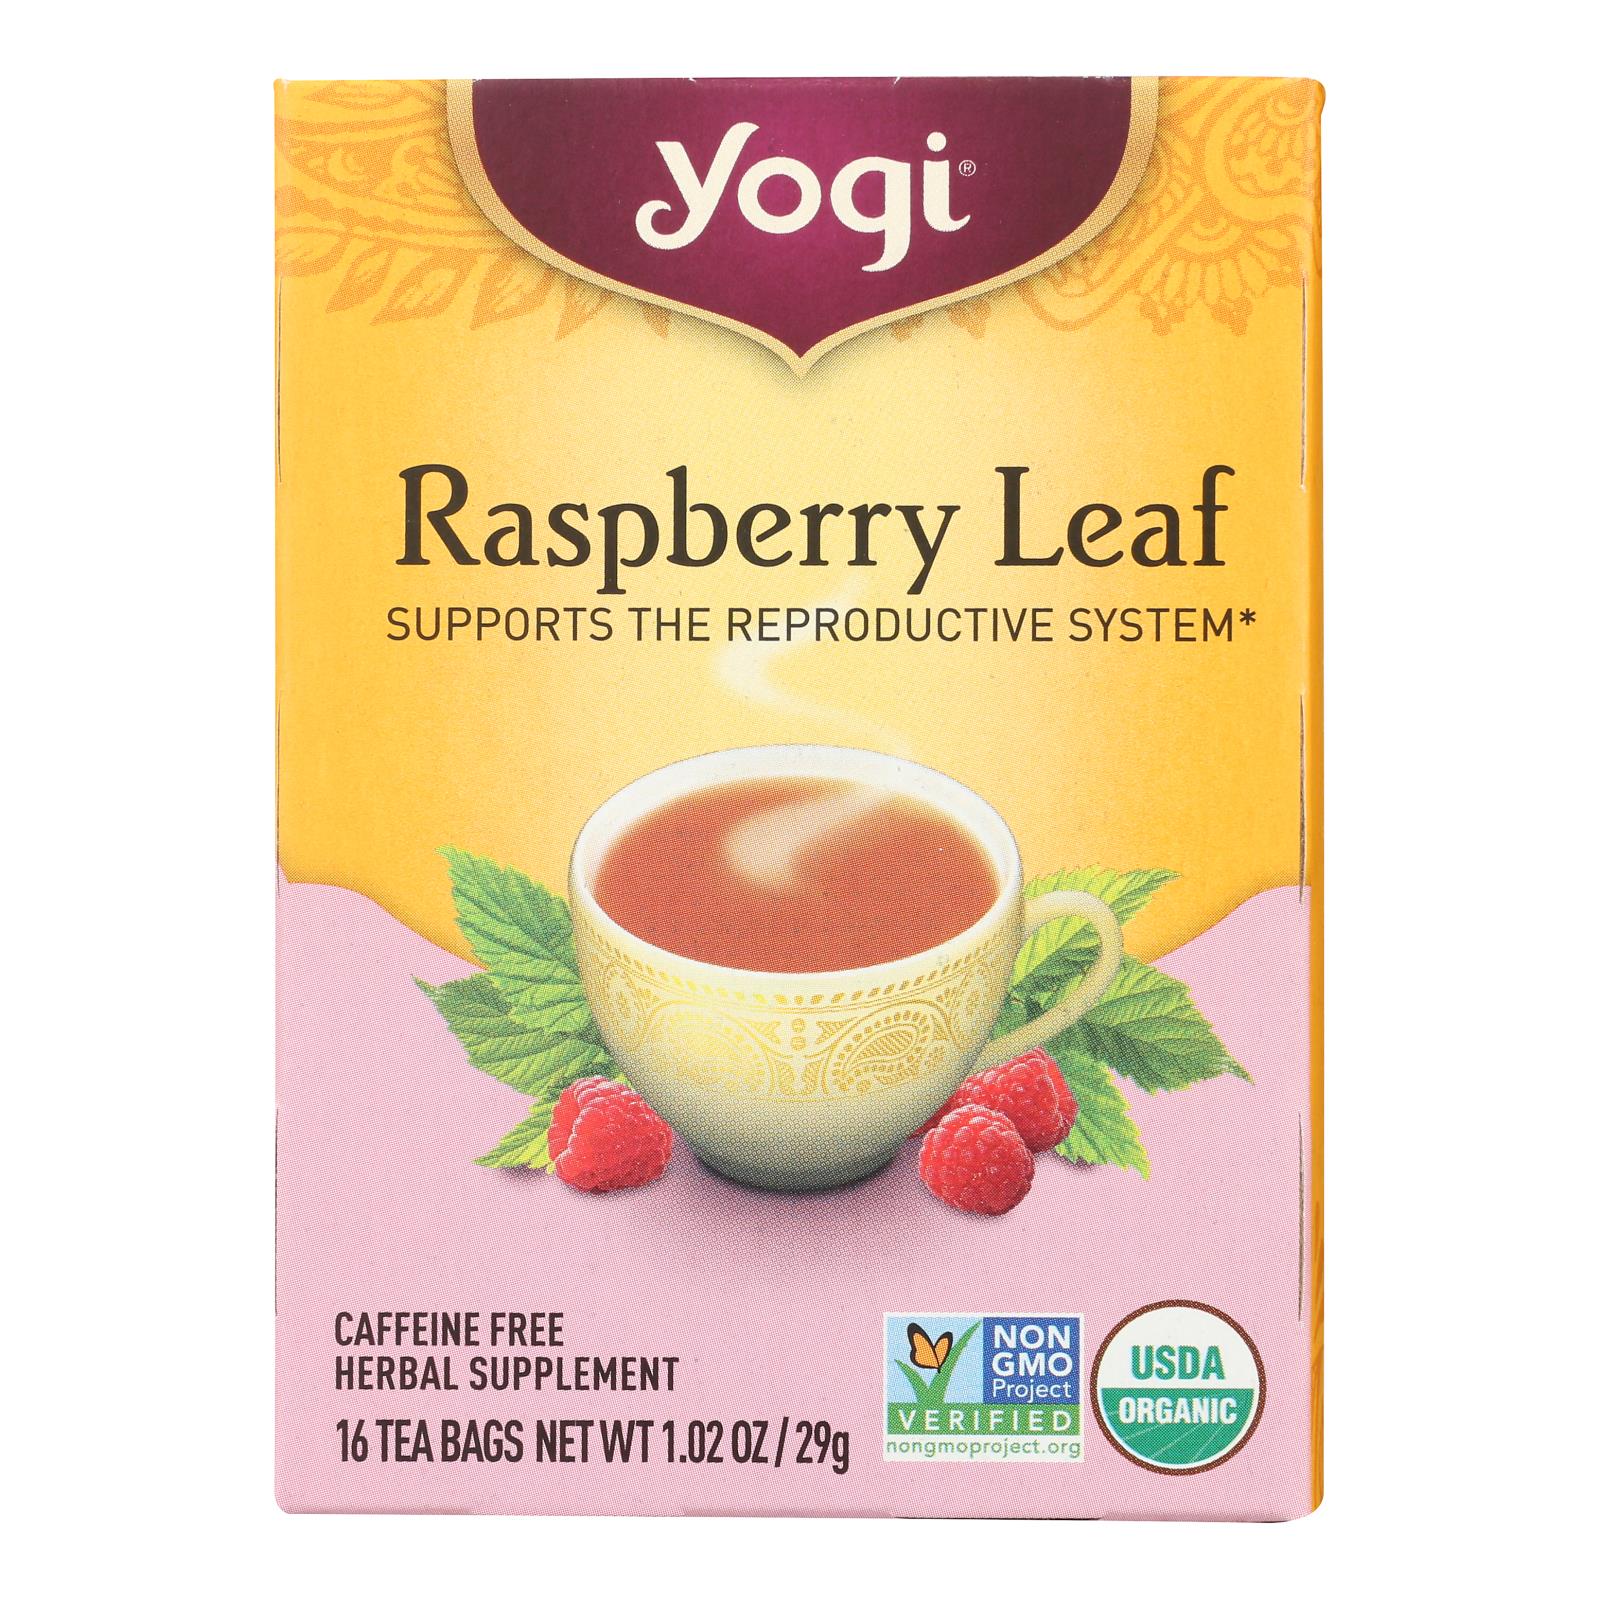 Yogi Organic Woman's Herbal Tea Raspberry Leaf - 16 Tea Bags - Case Of 6